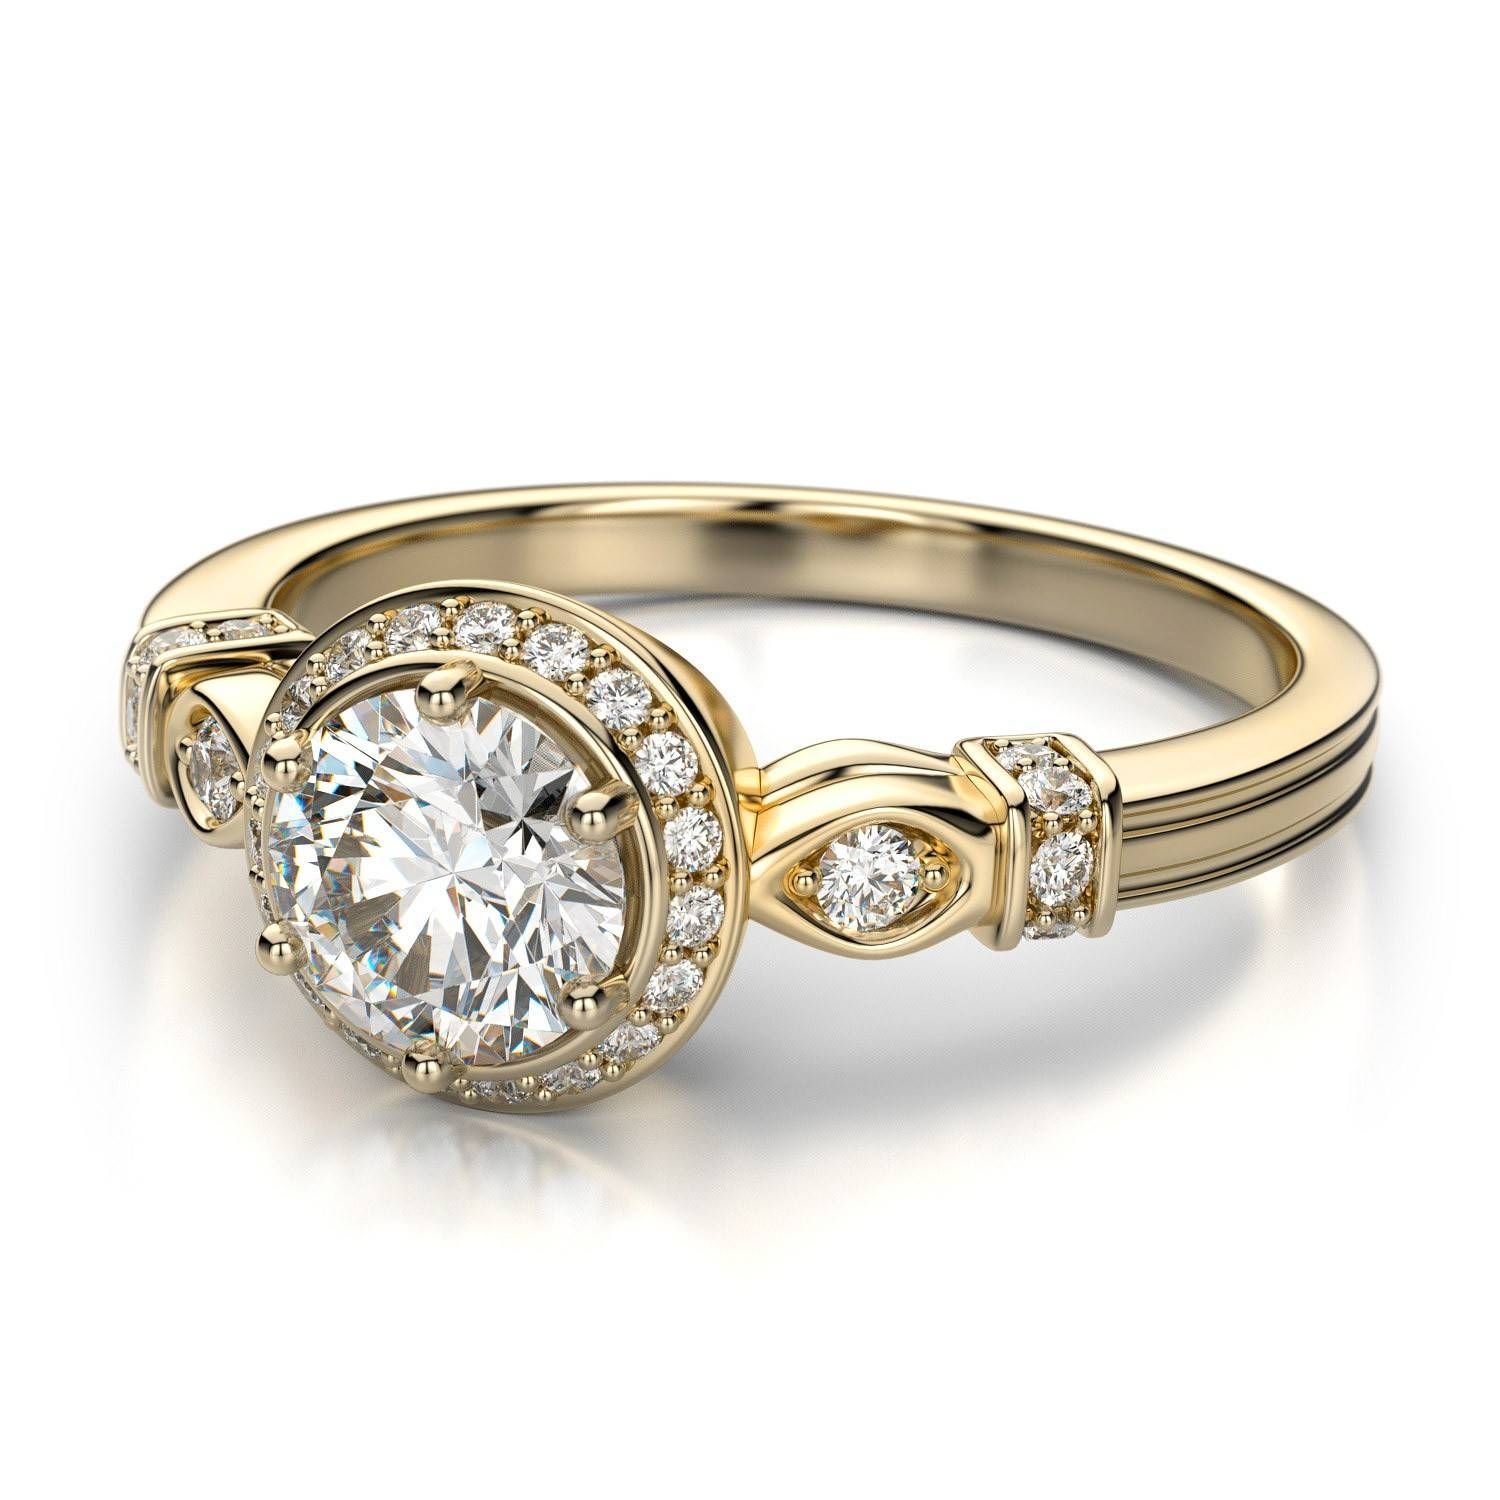 Antique Wedding Bands Design: Men And Women | Wedding Ideas Throughout Antique Diamond Wedding Rings (View 10 of 15)